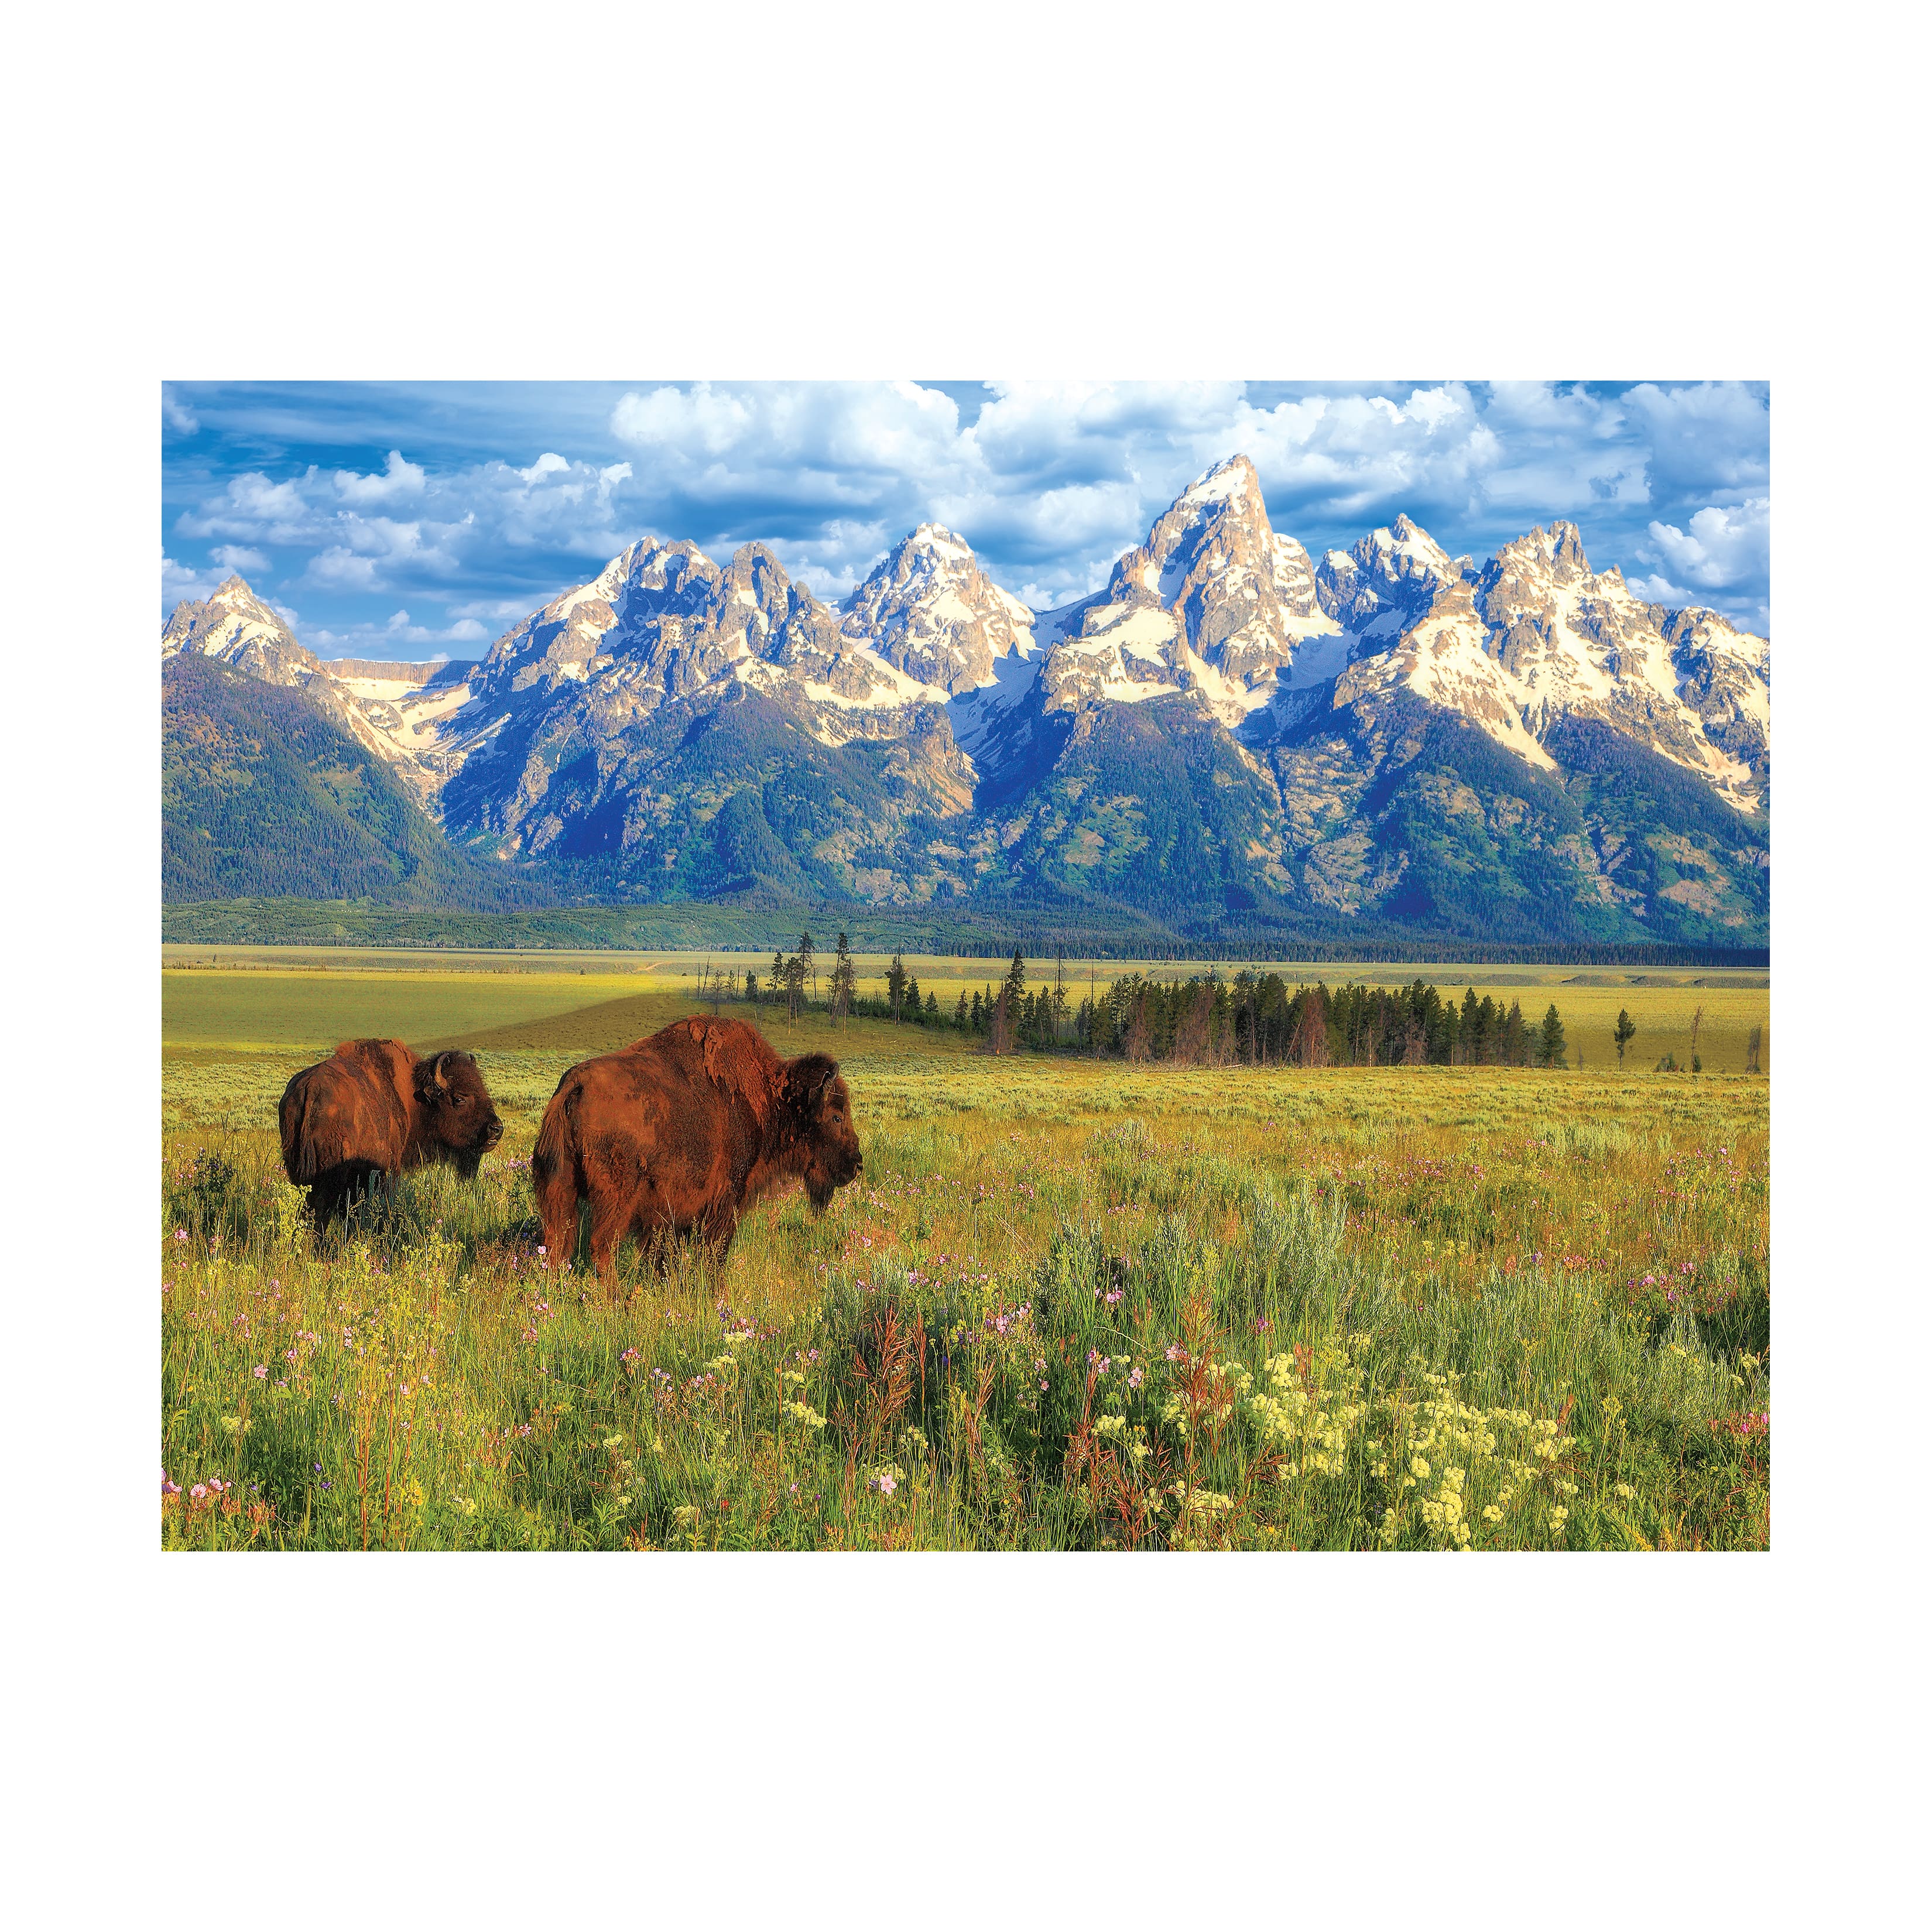 Steve Hinch - Grand Teton National Park, Wyoming, USA: 1000 Pcs